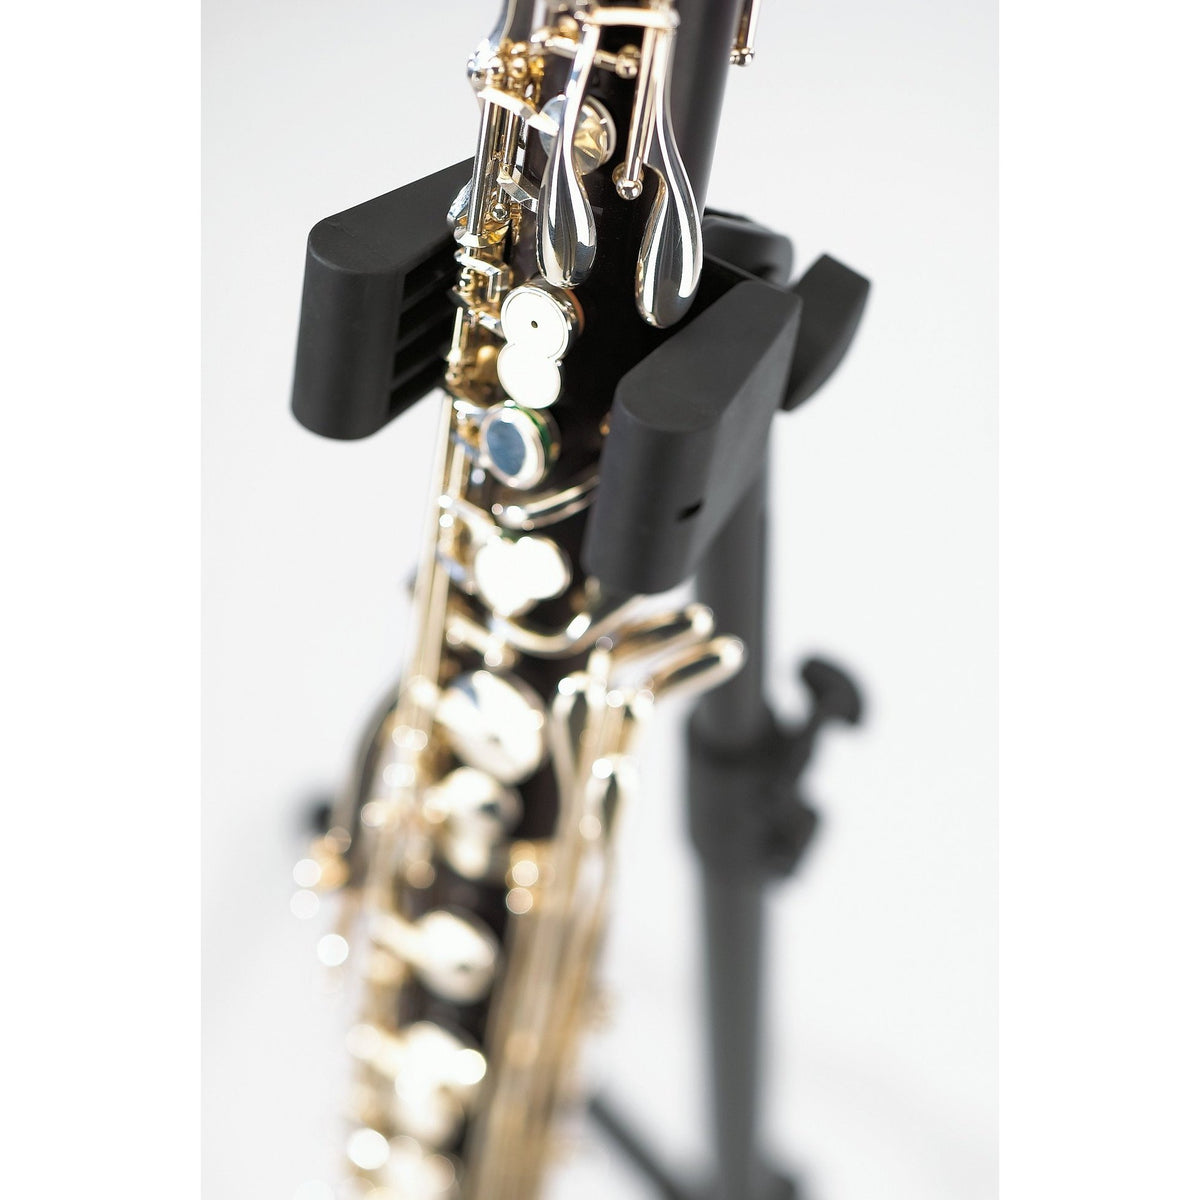 KÃ¶nig &amp; Meyer - 15060 Bass Clarinet Stand-Instrument Stand-KÃ¶nig &amp; Meyer-Music Elements